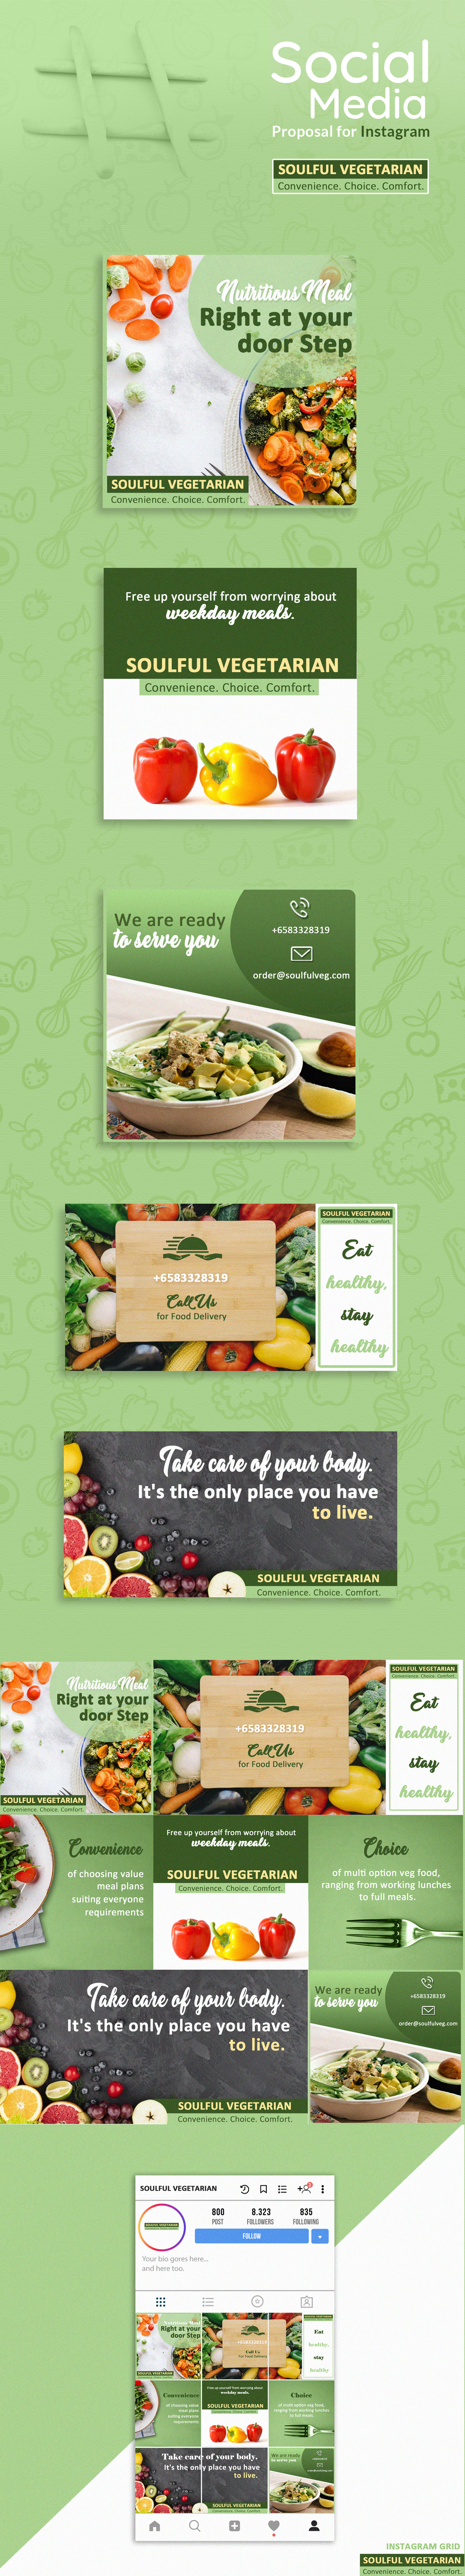 Socialmedia digitalmarketing branding  organicfood fitness graphic identity brandingproject healthyfood